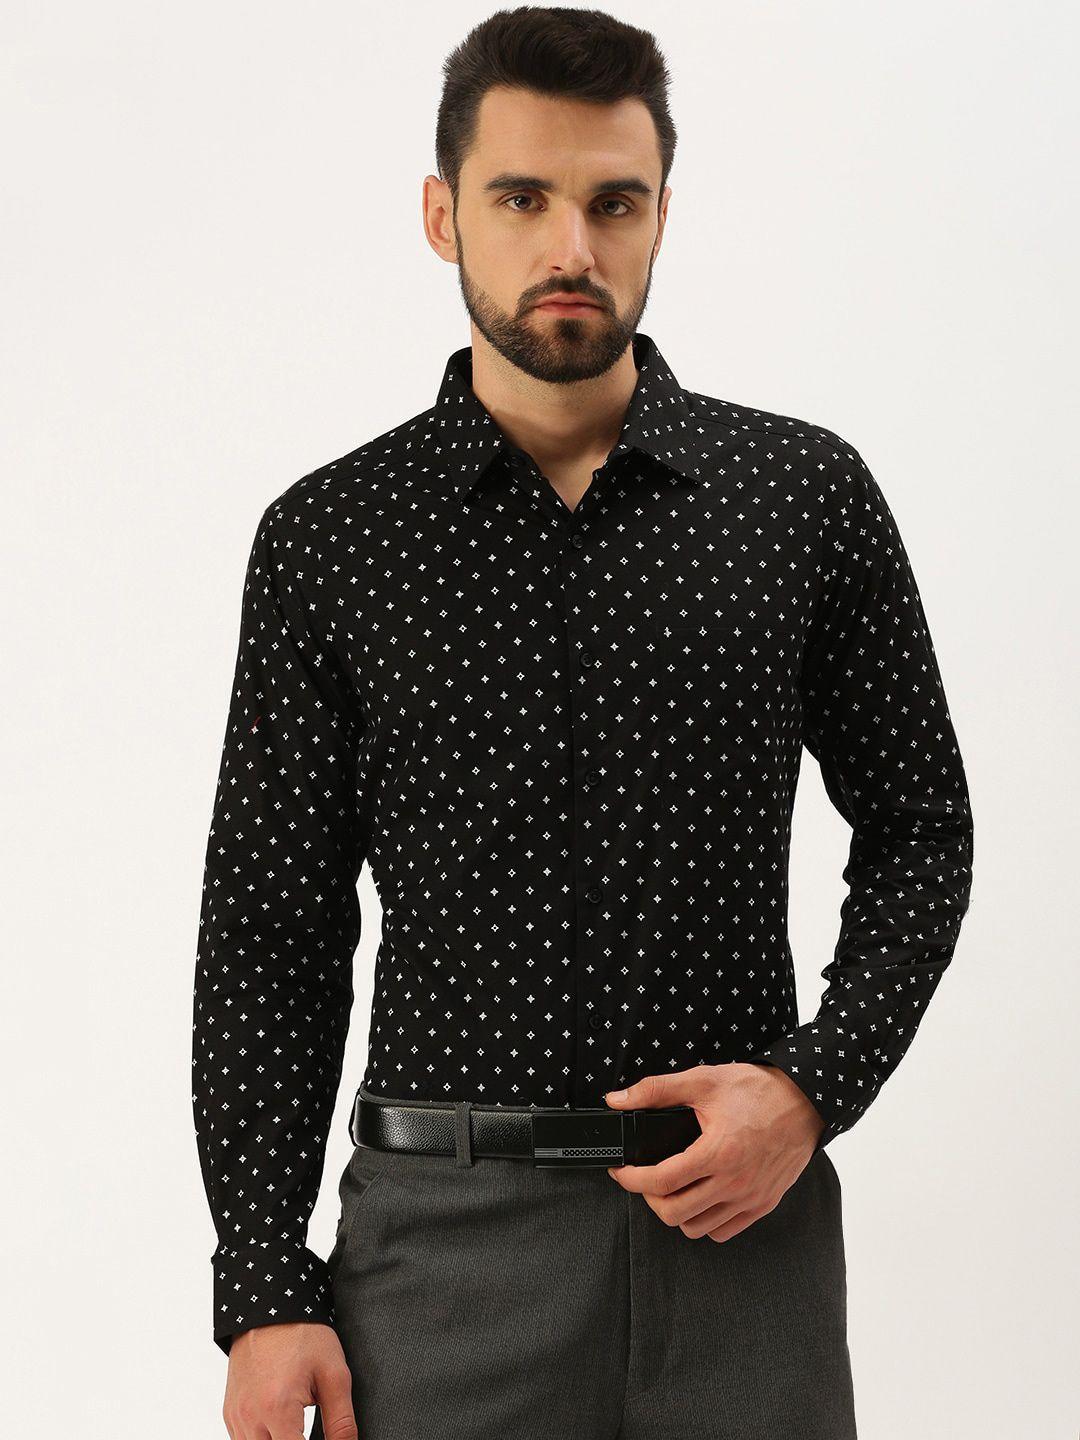 ivoc-men-comfort-printed-formal-cotton-shirt